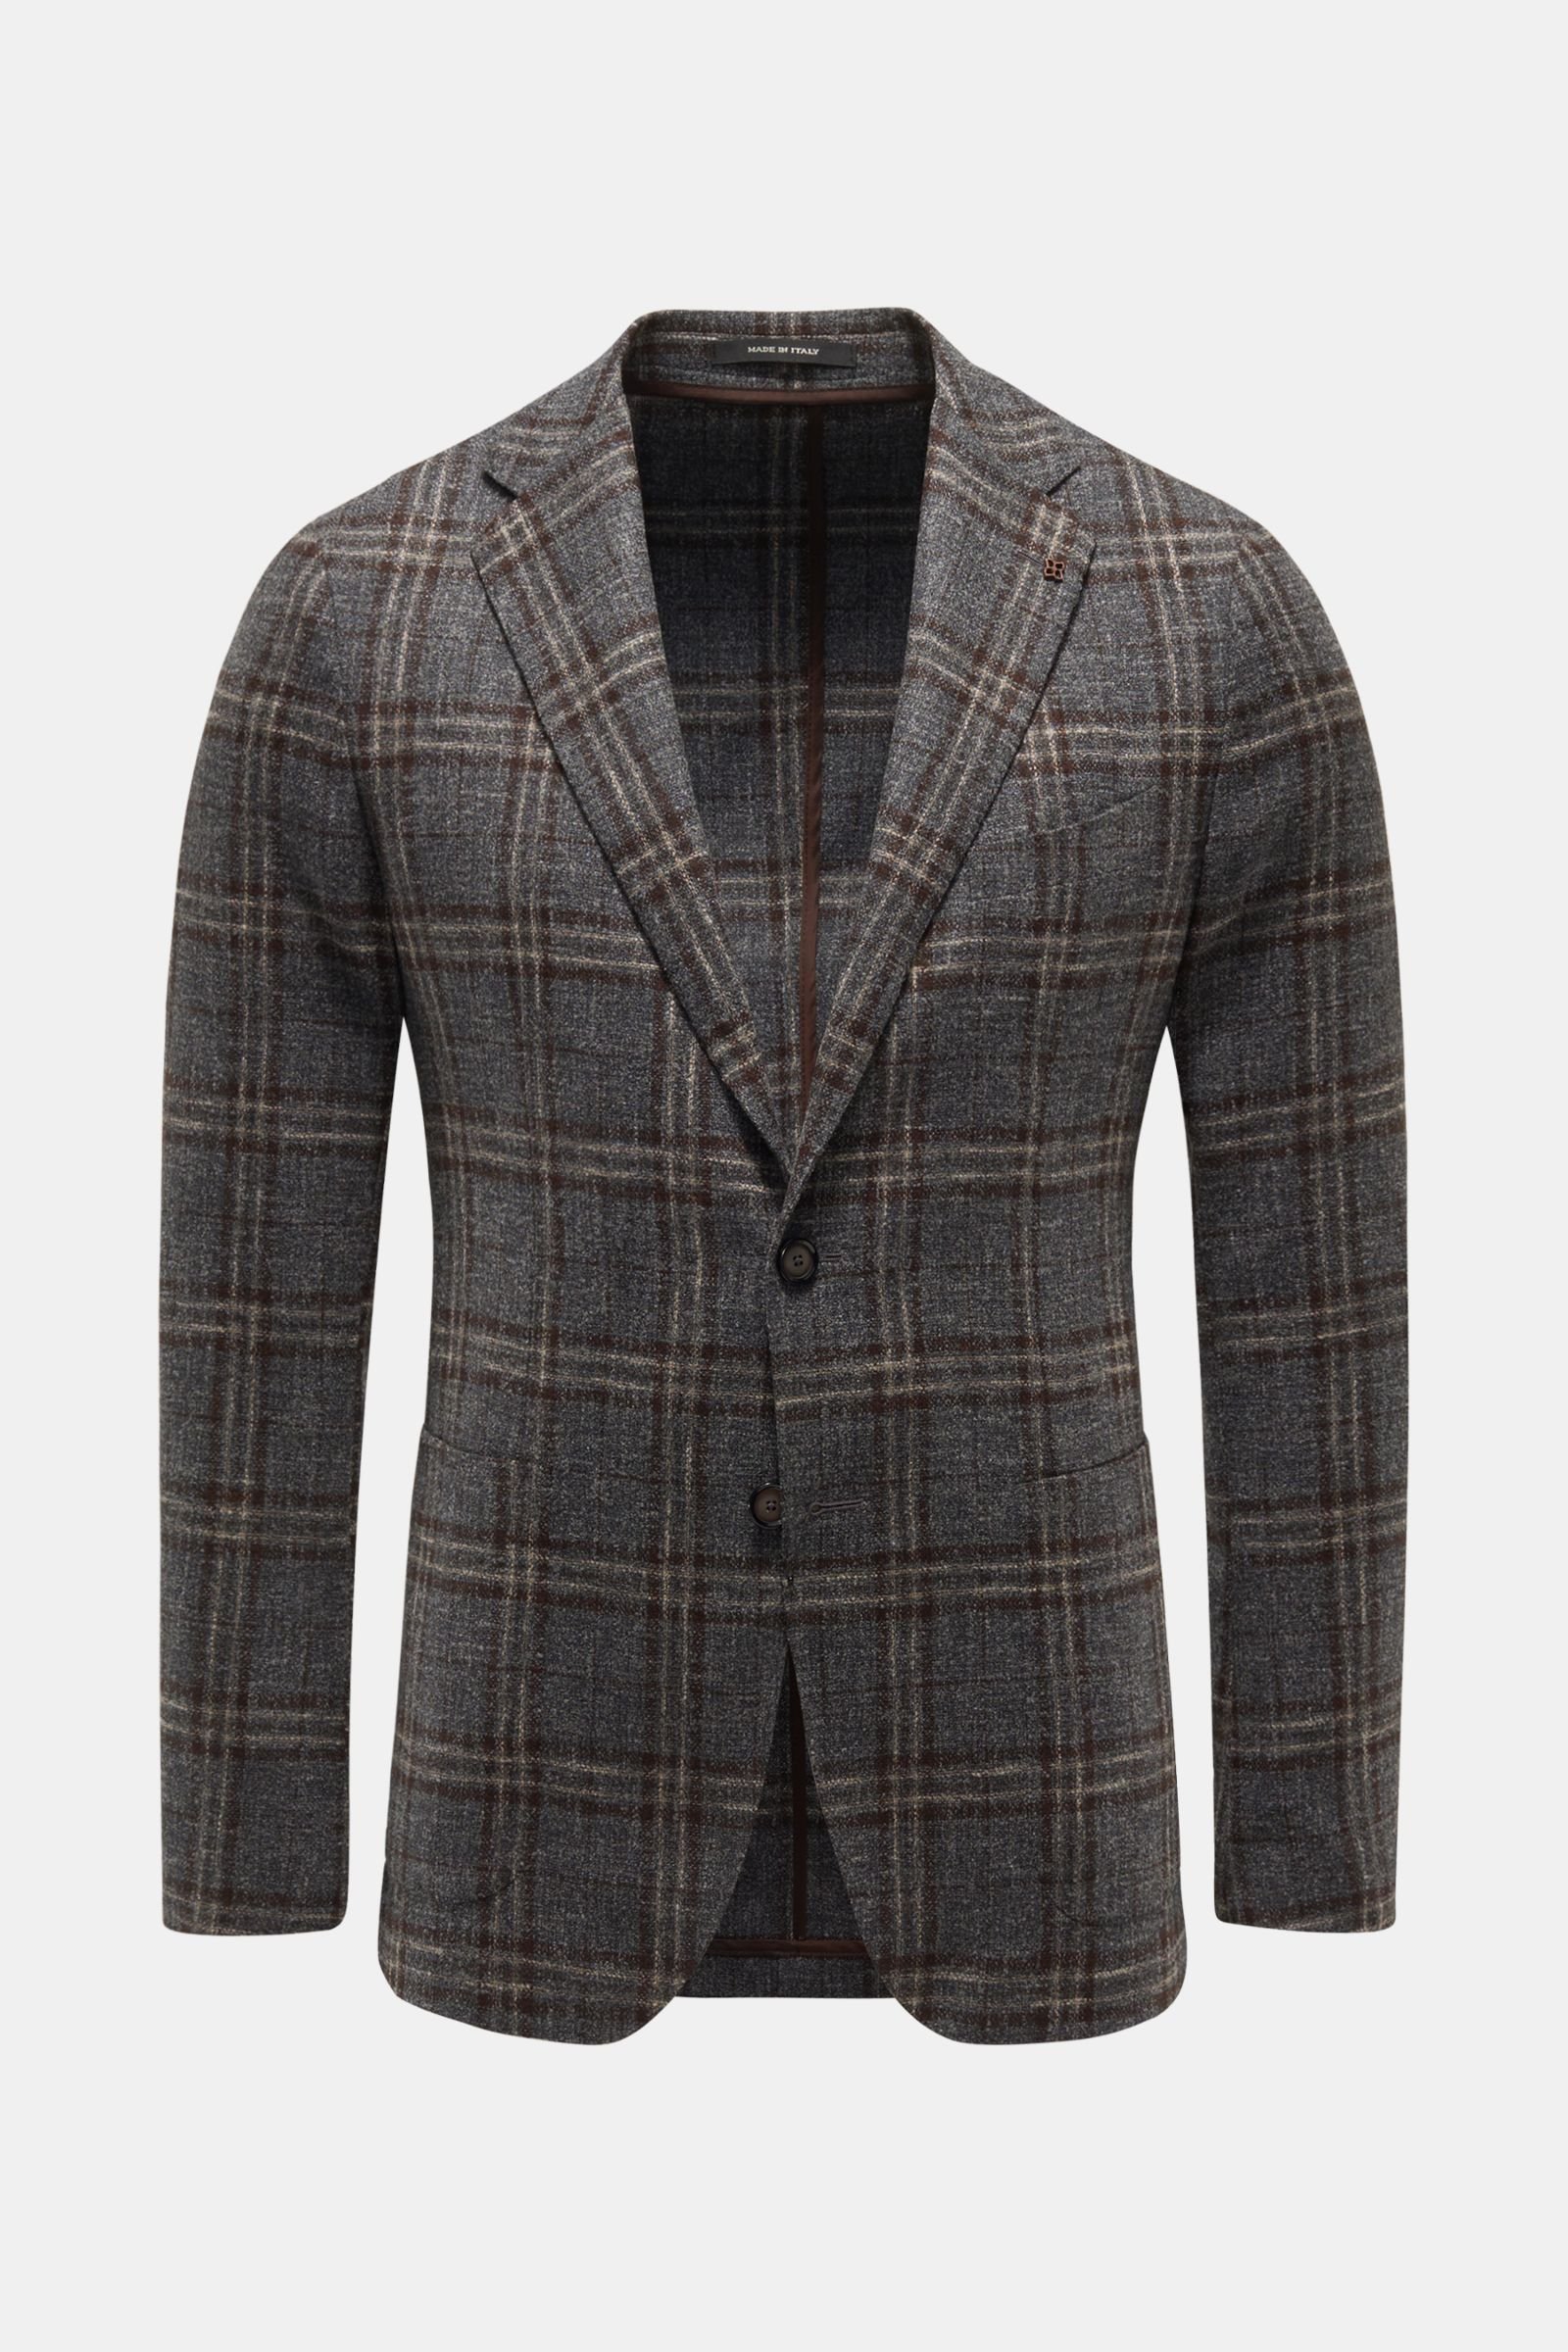 Smart-casual jacket dark grey/dark brown checked